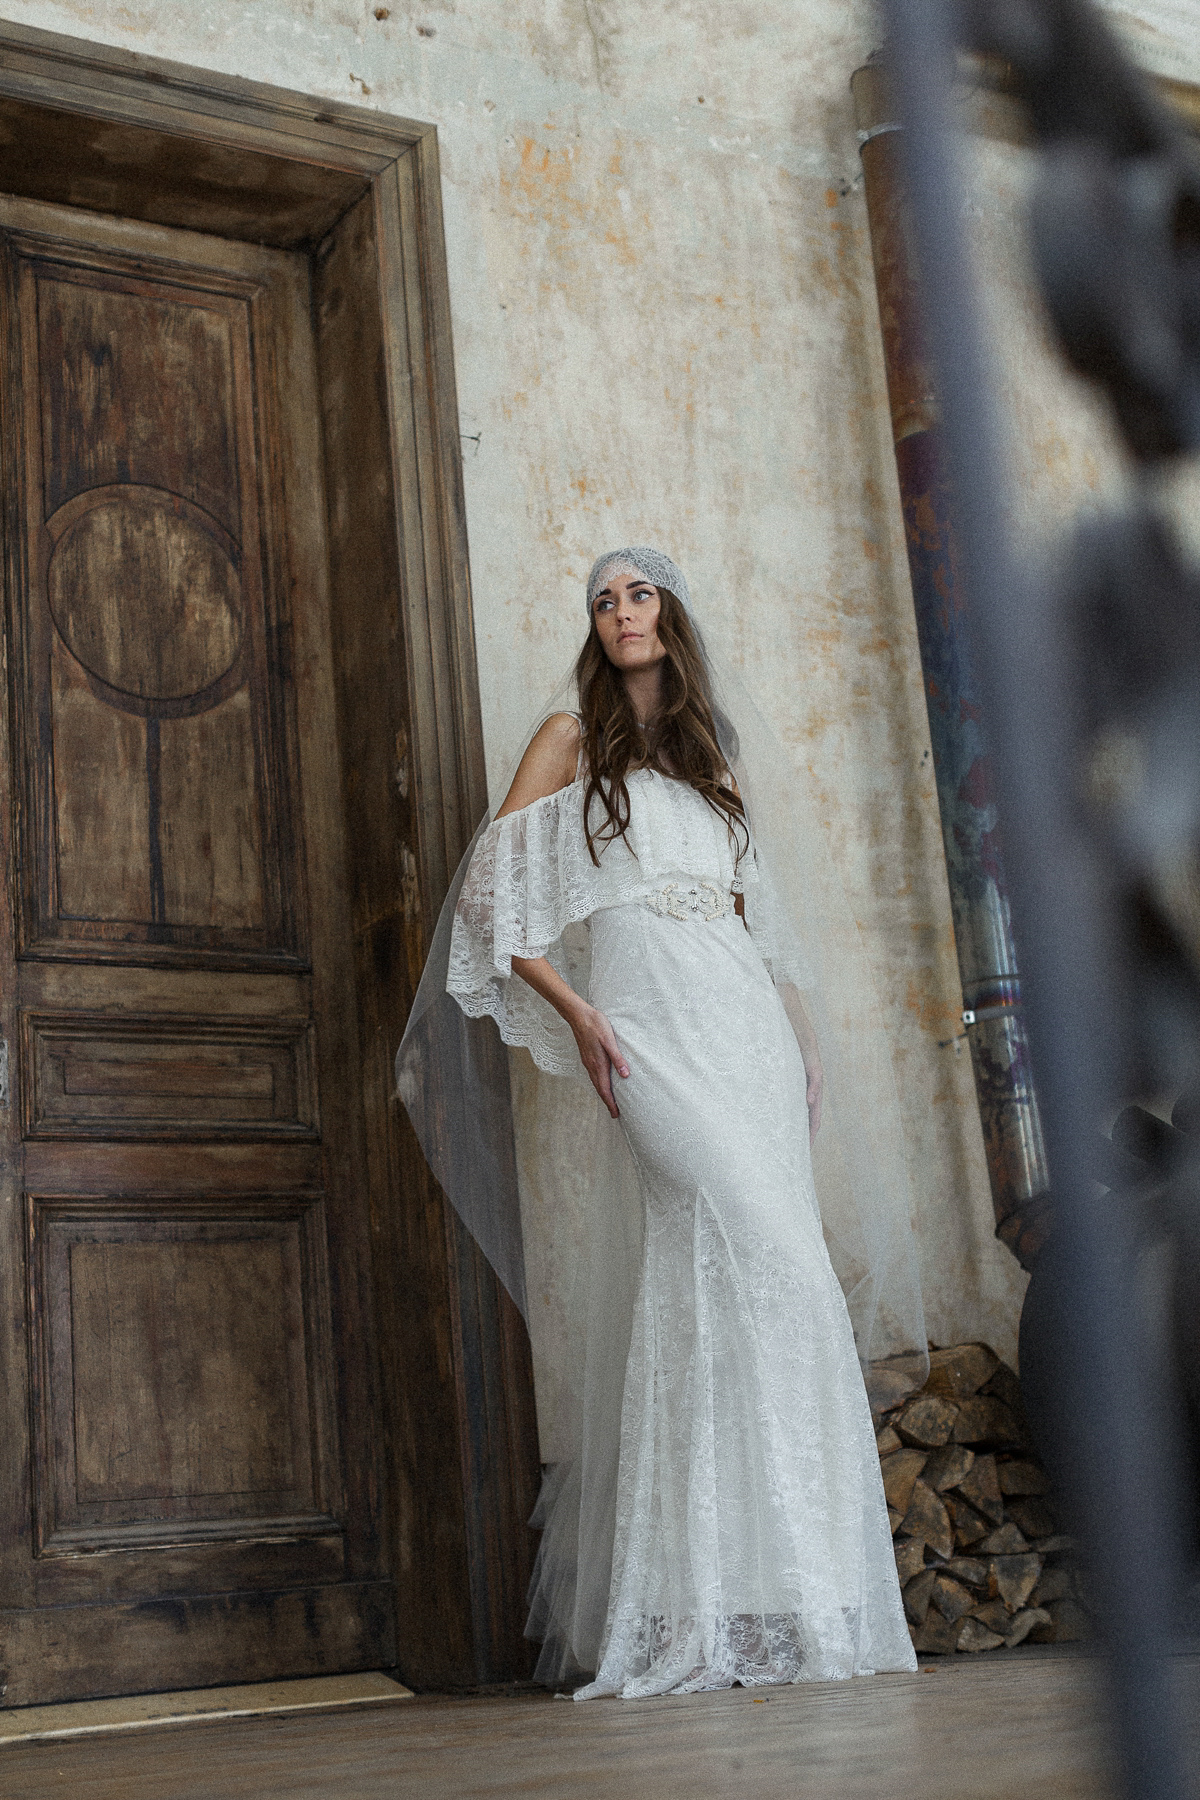 Wedding dresses by Katya Katya Shehurina + 10% saving on 'dress of the month'.